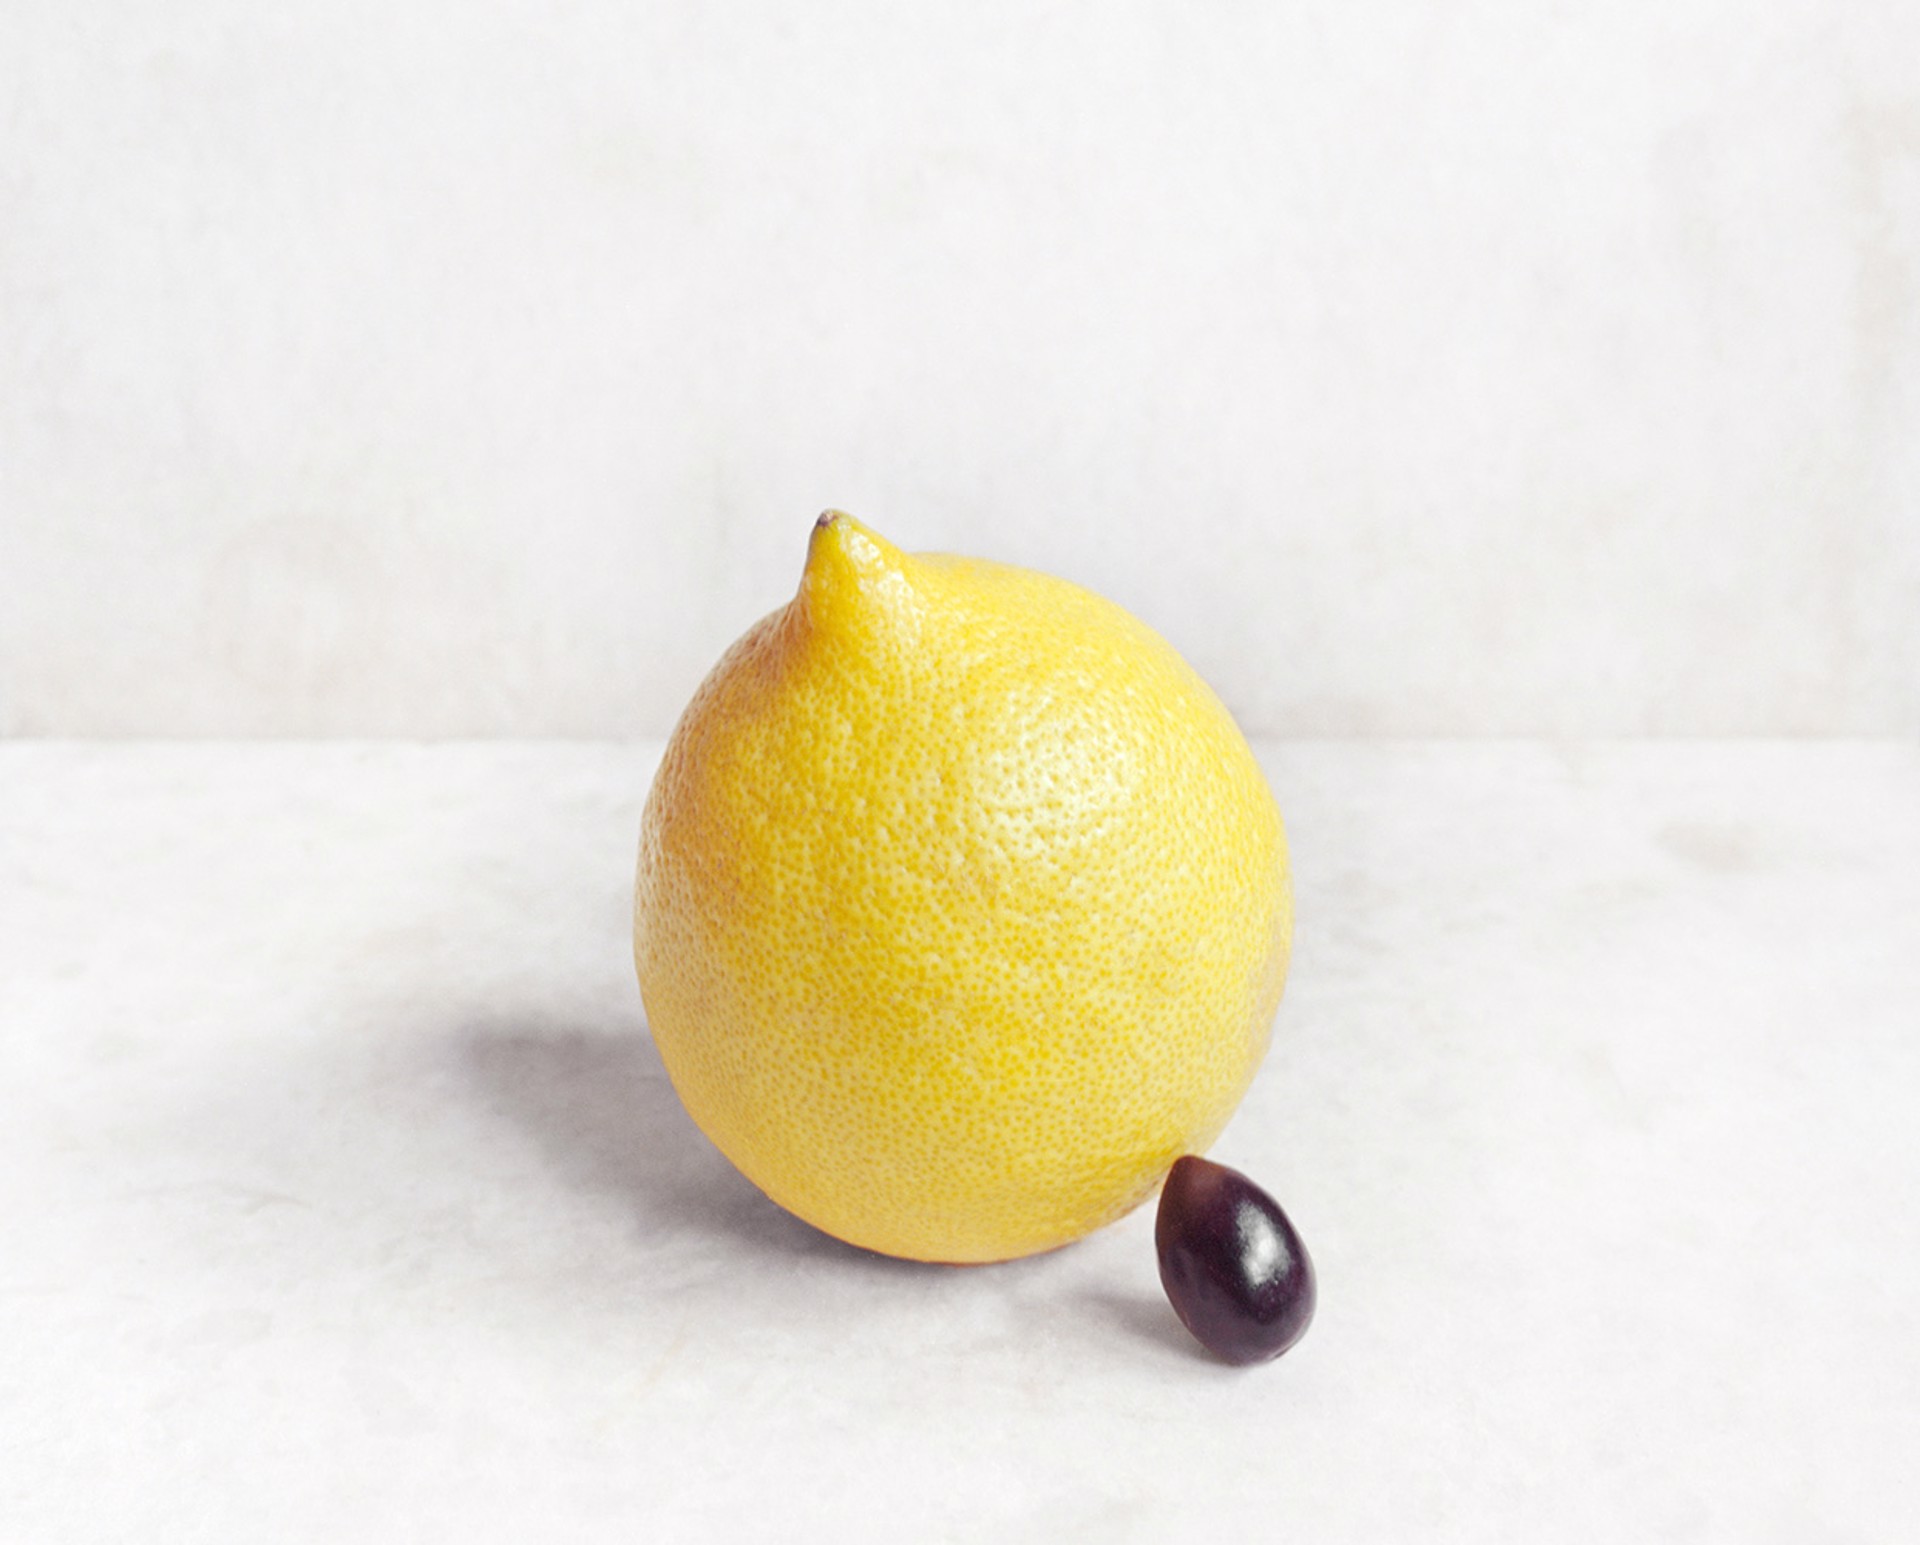 Lemon and Black Olive by David Halliday